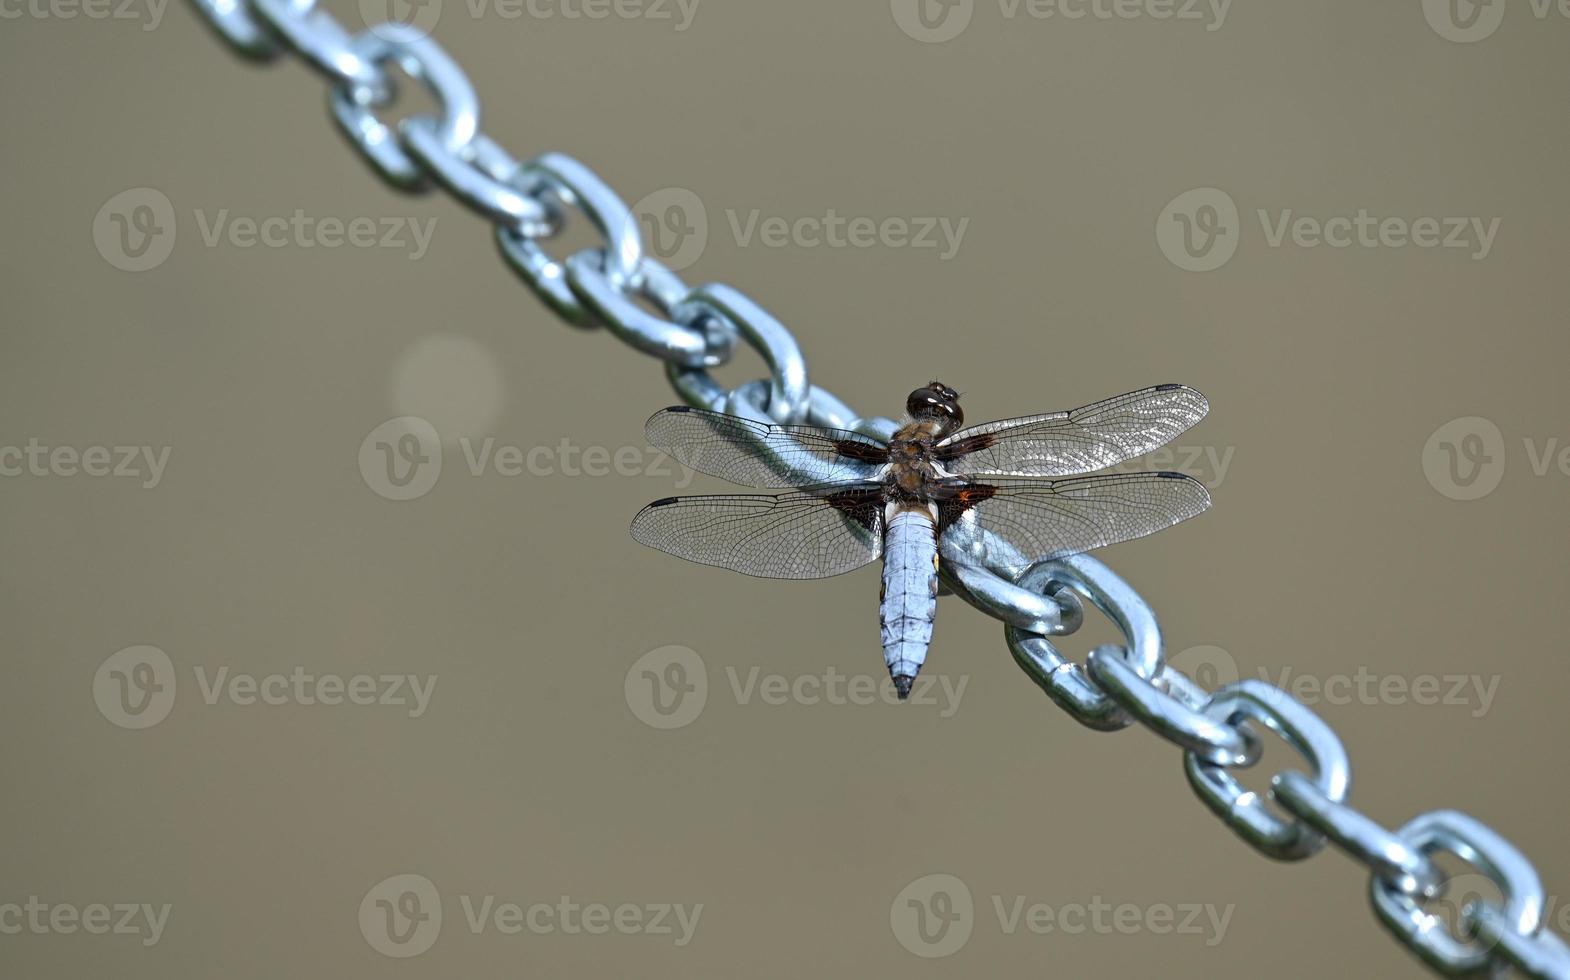 una gran libélula aterriza en una cadena de acero foto